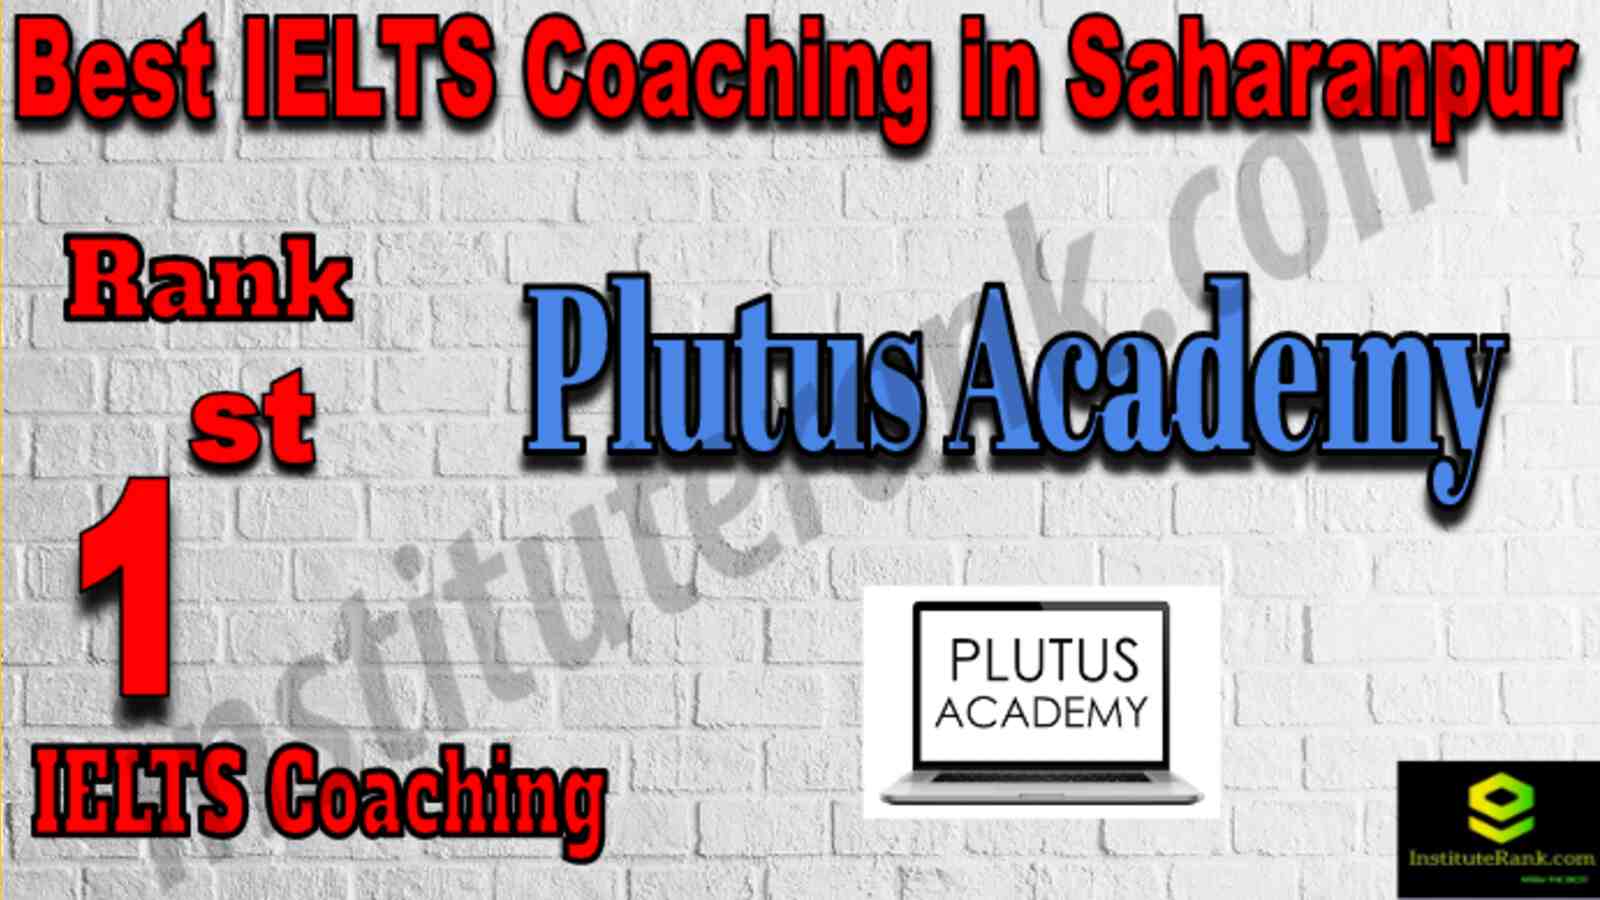 1st Best IELTS Coaching in Saharanpur